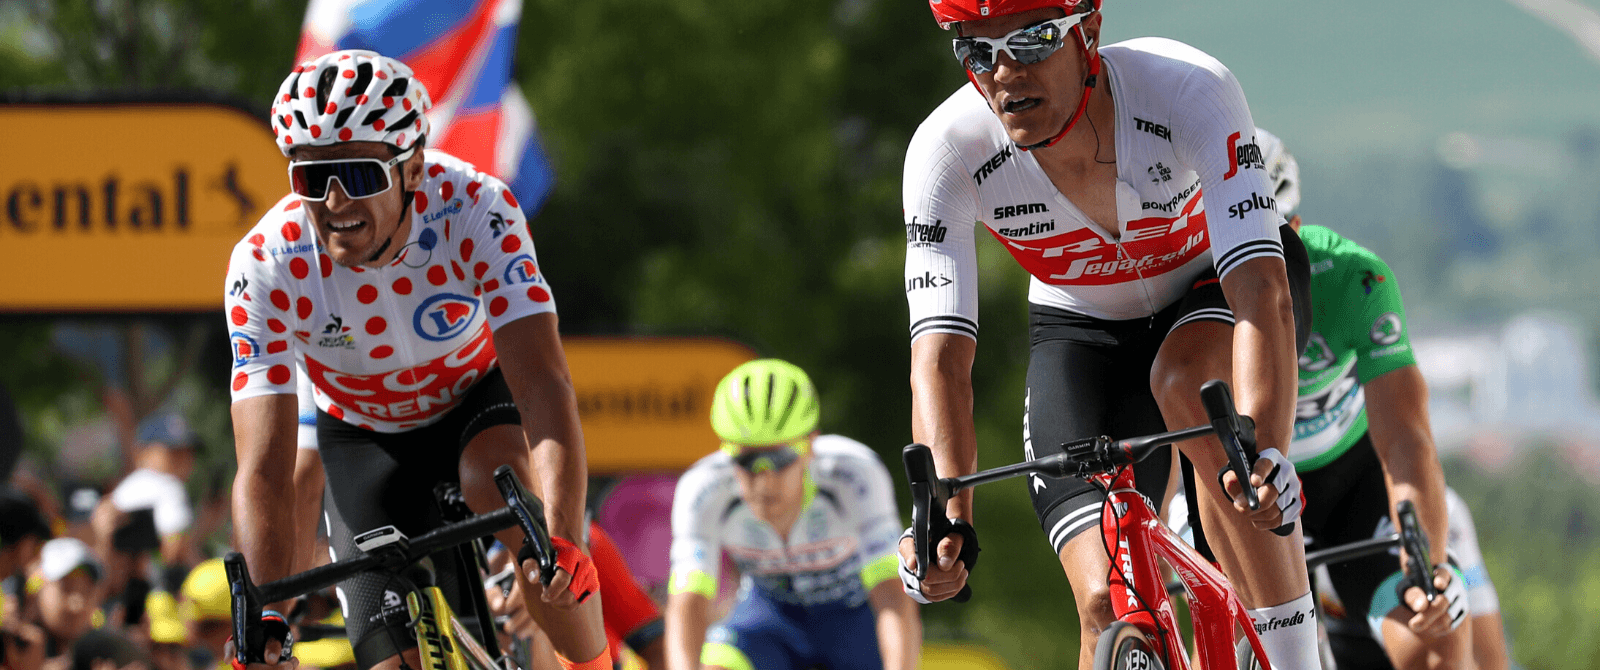 Wet en regelgeving Snikken achterstalligheid What do the jerseys mean in the tour de France? | Trek Travel